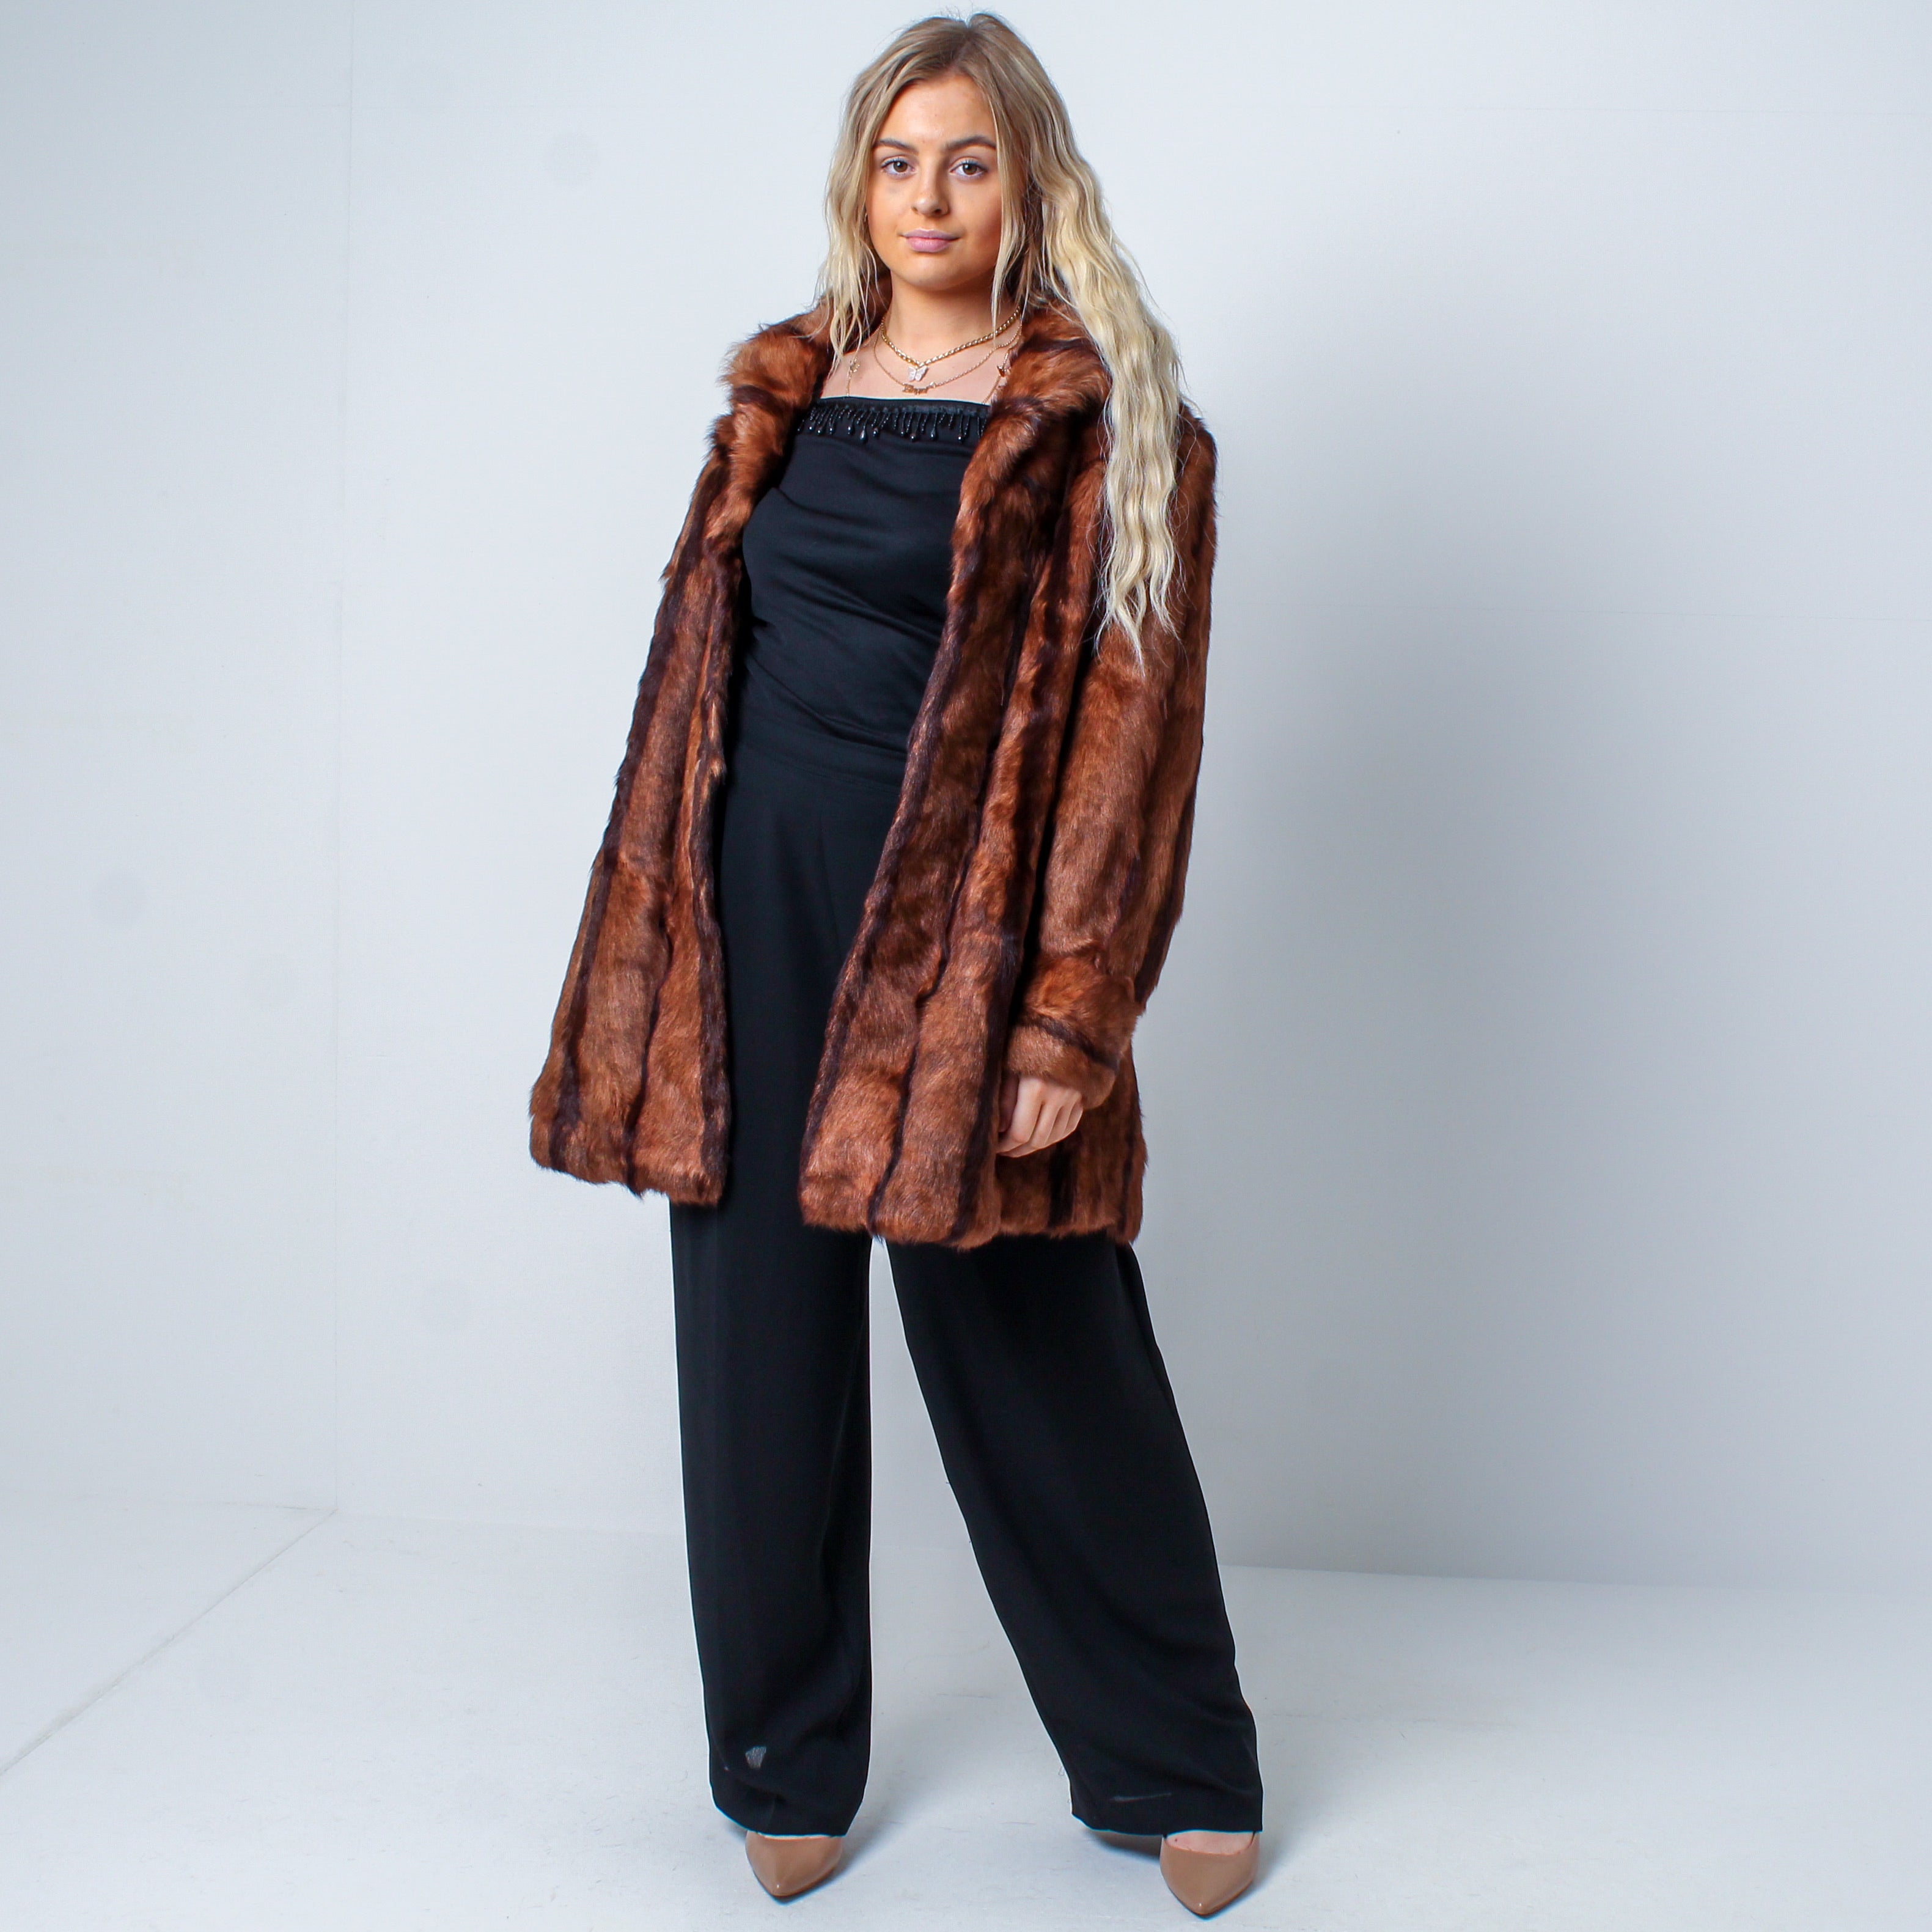 Women’s Luxury Vintage Real Mink Fur Coat Size: Small-Medium UK 8-12